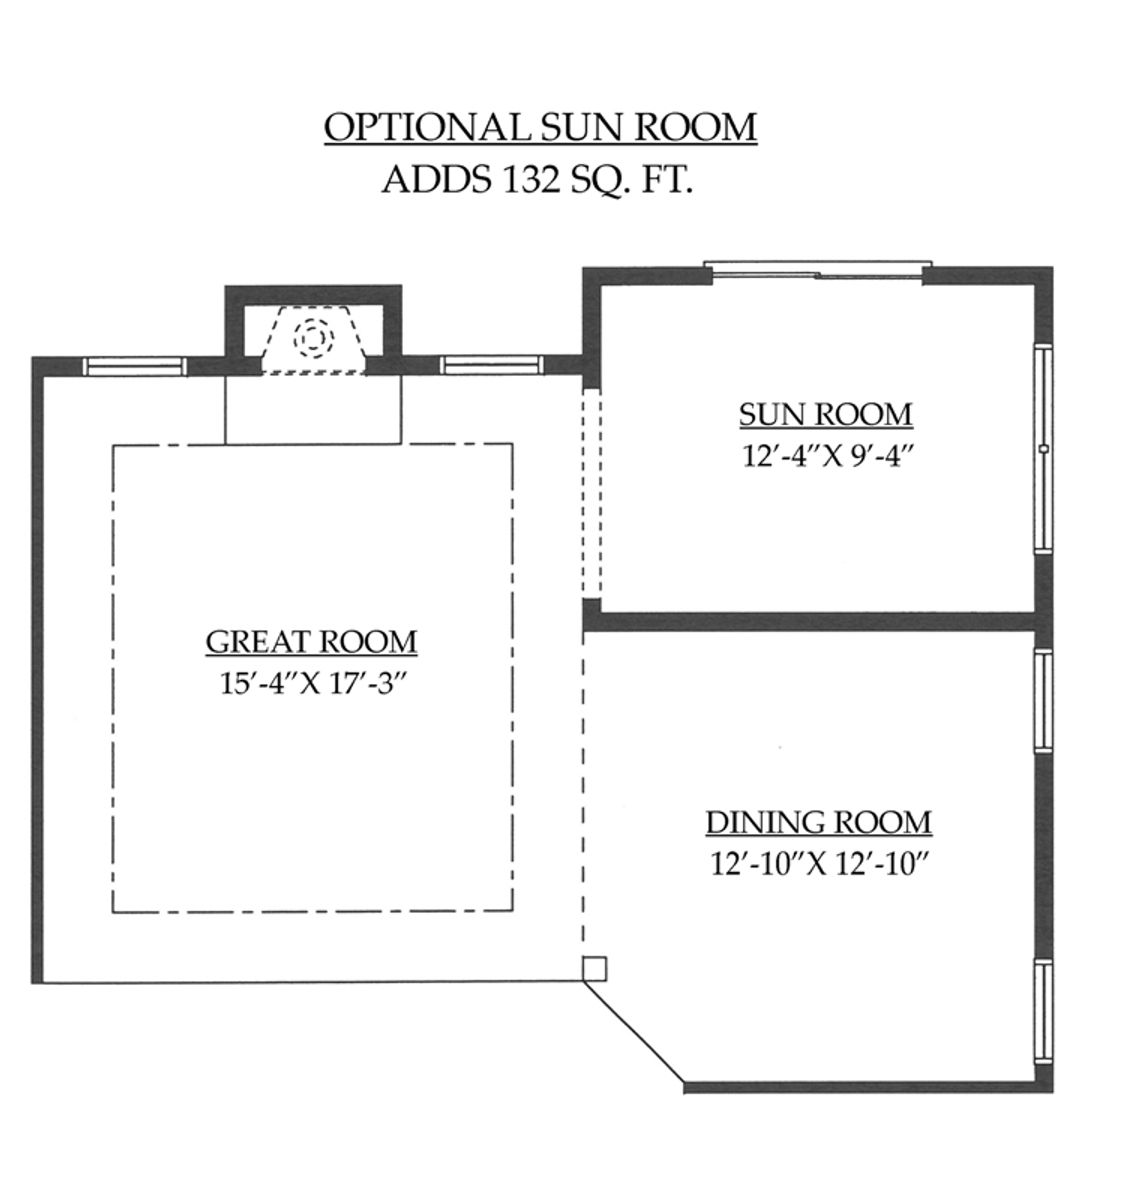 Sun Room - Option 2